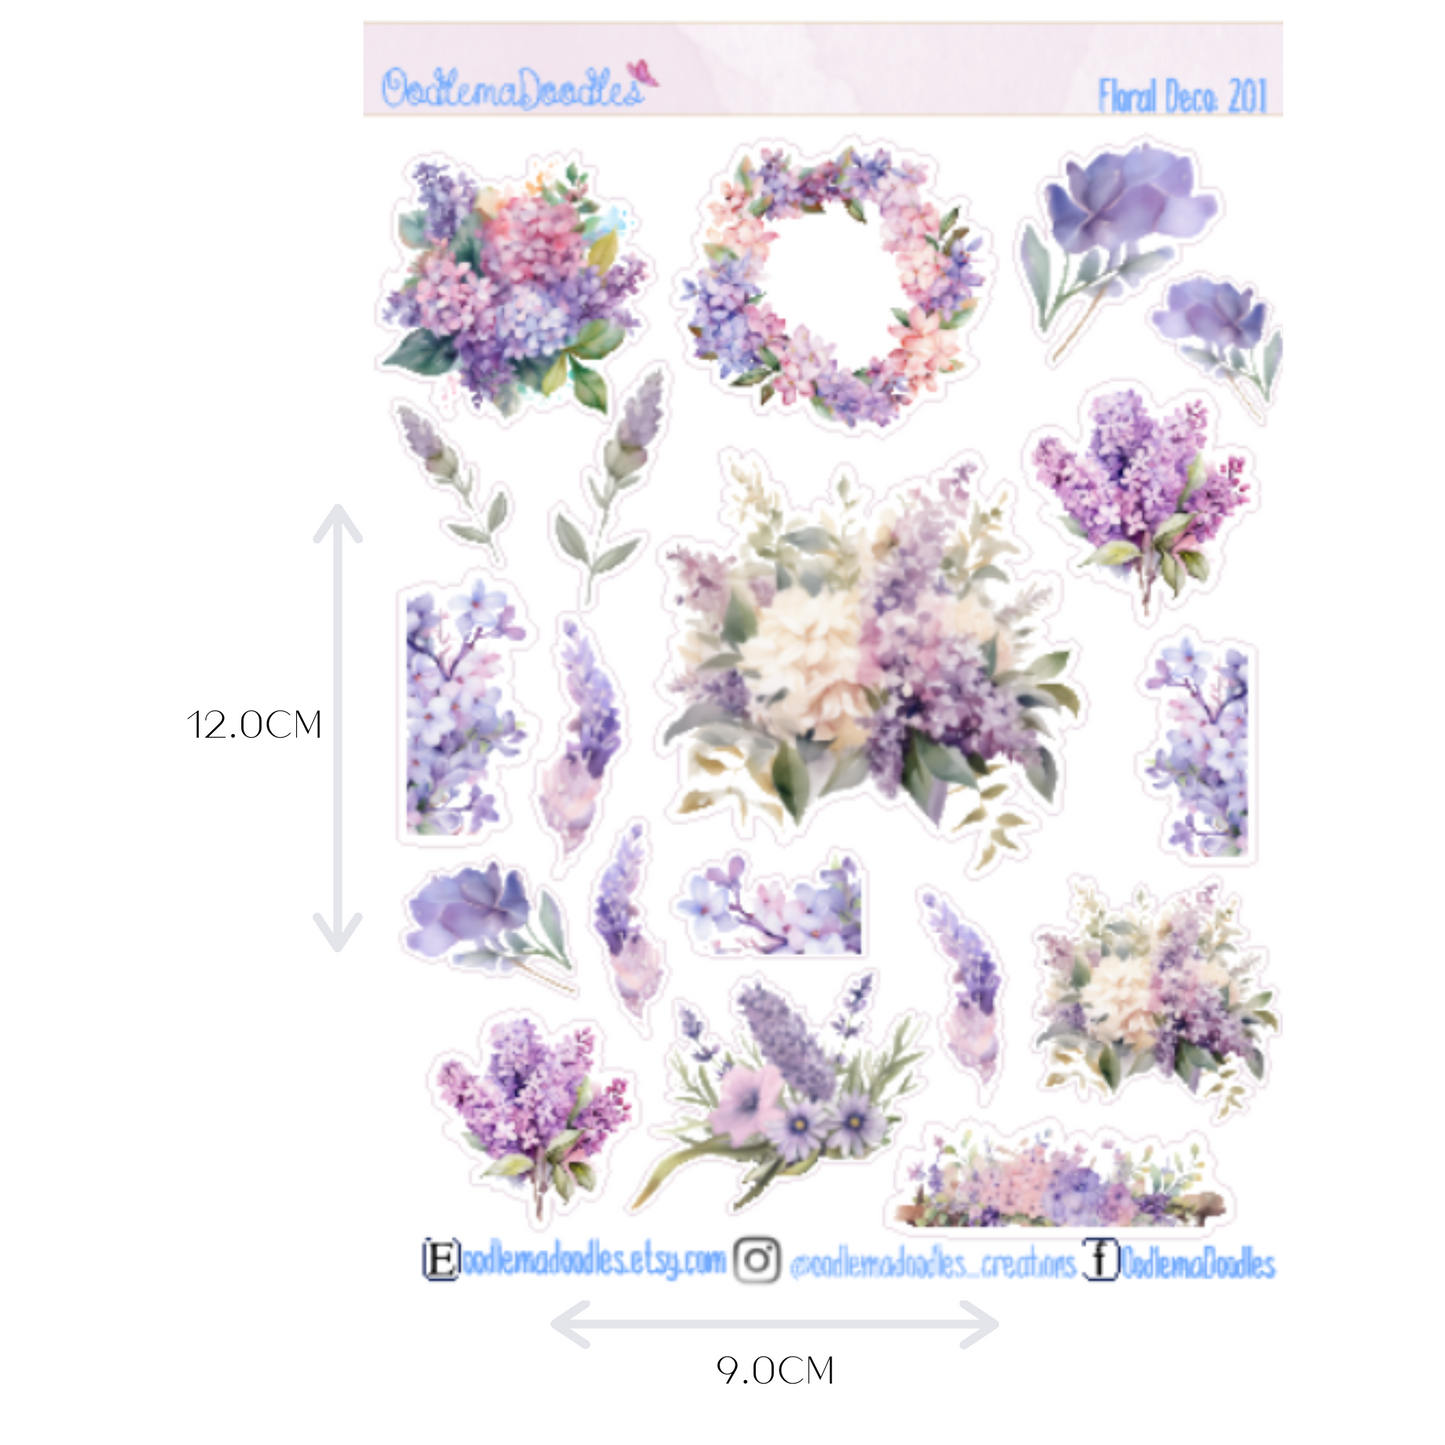 Lilac Dreams Floral Decorative Stickers